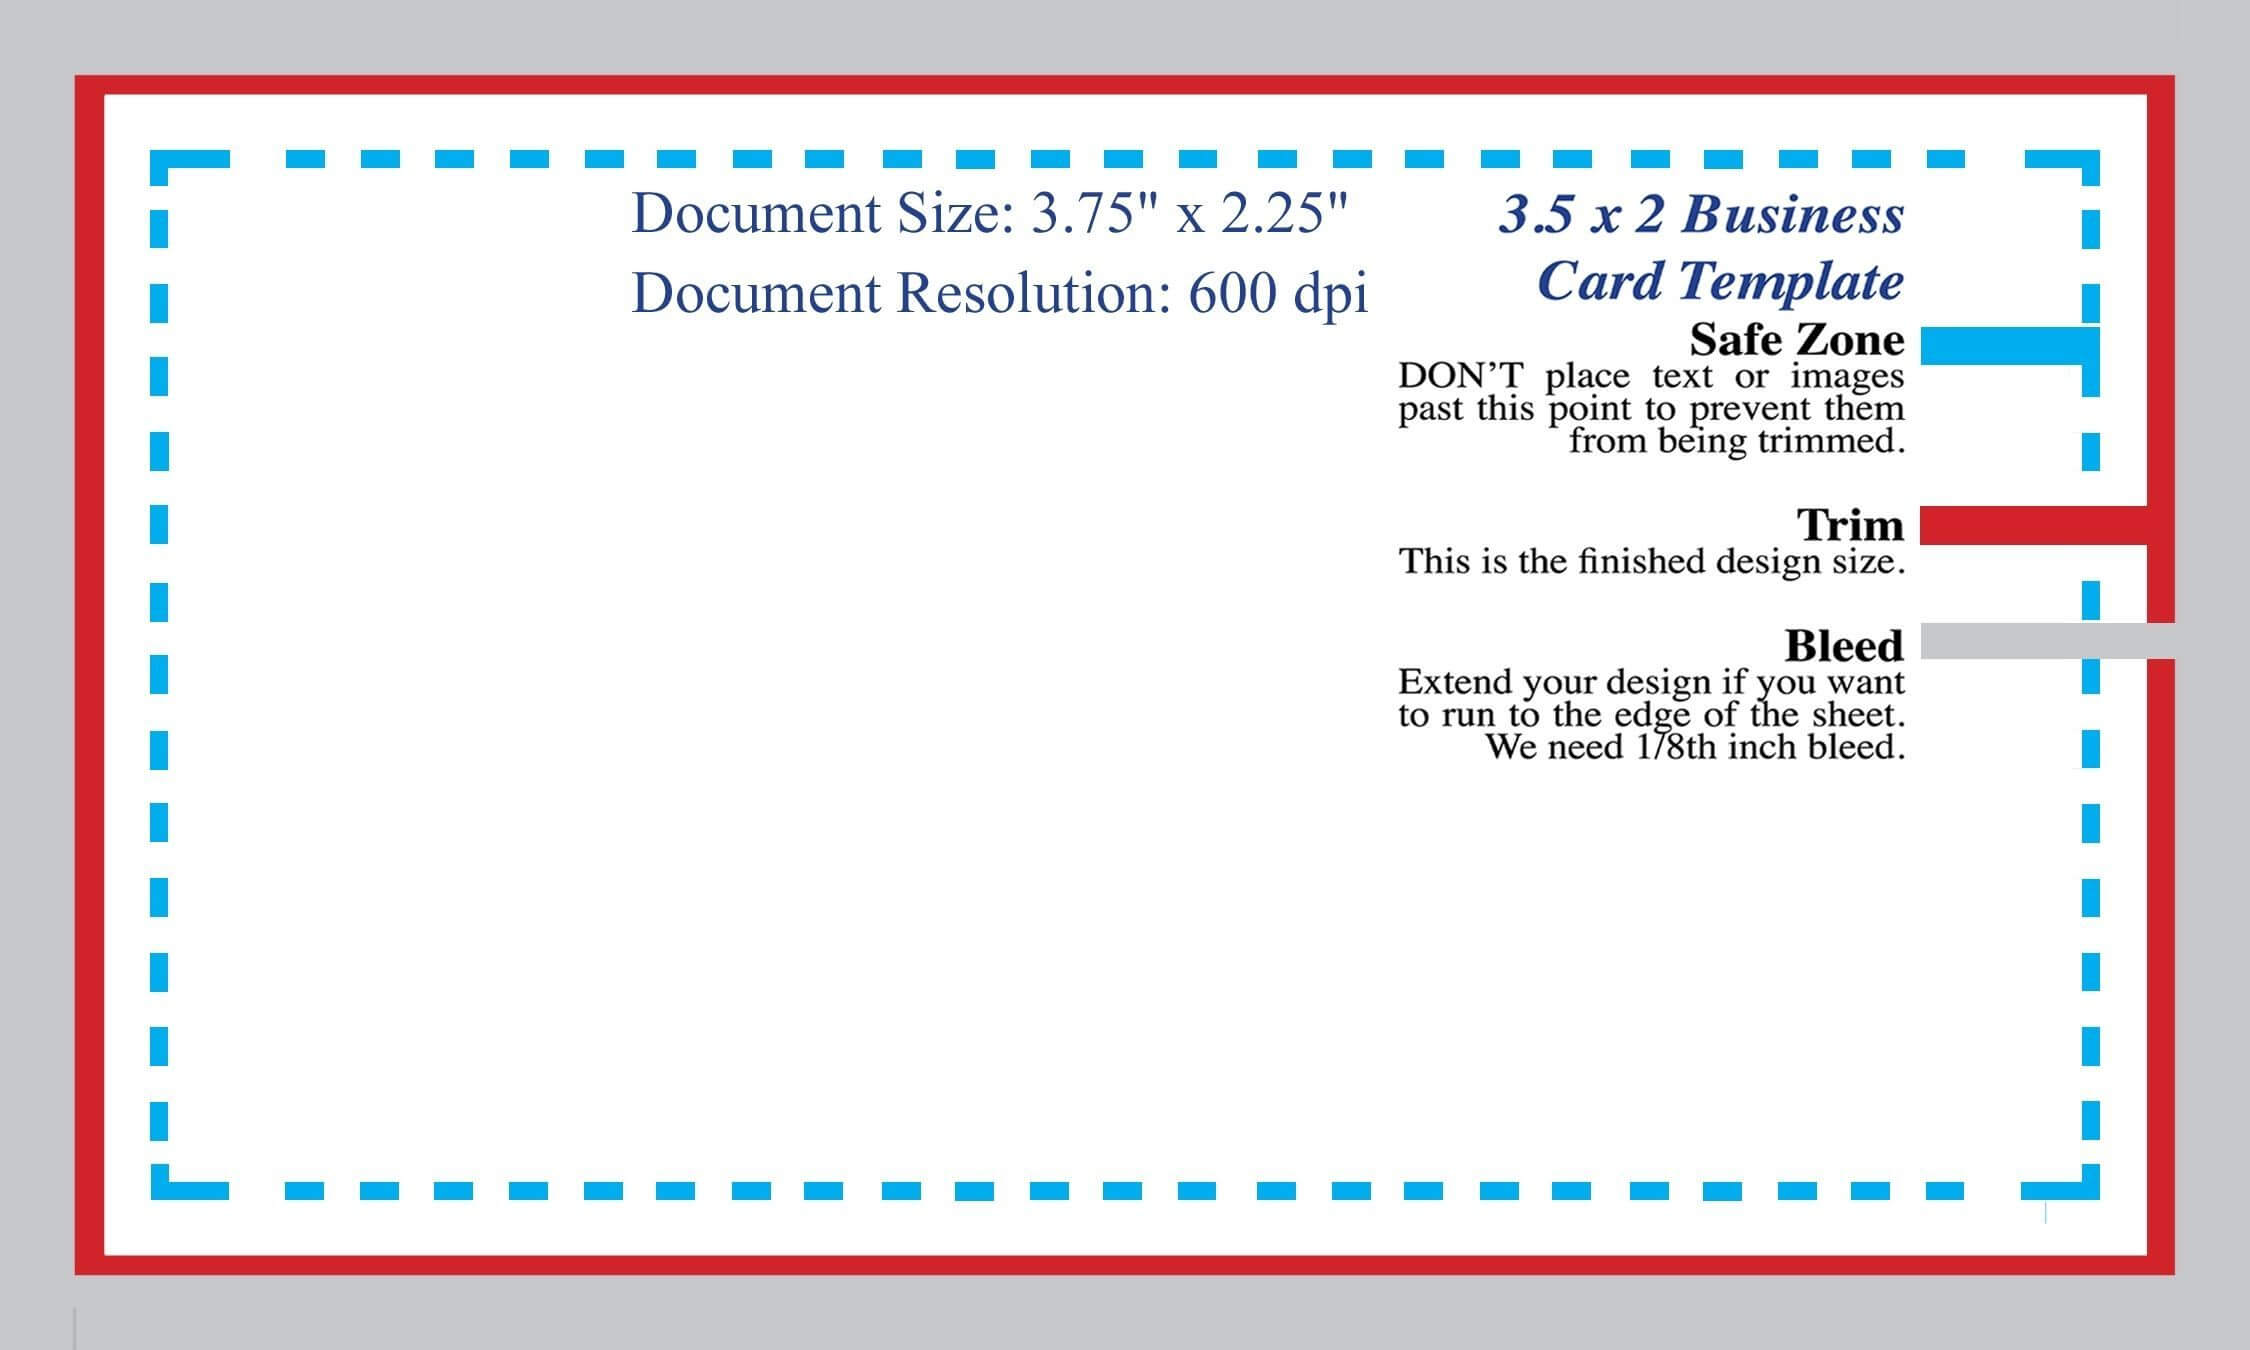 Standard Business Card Blank Template Photoshop Template Intended For Business Card Template Size Photoshop